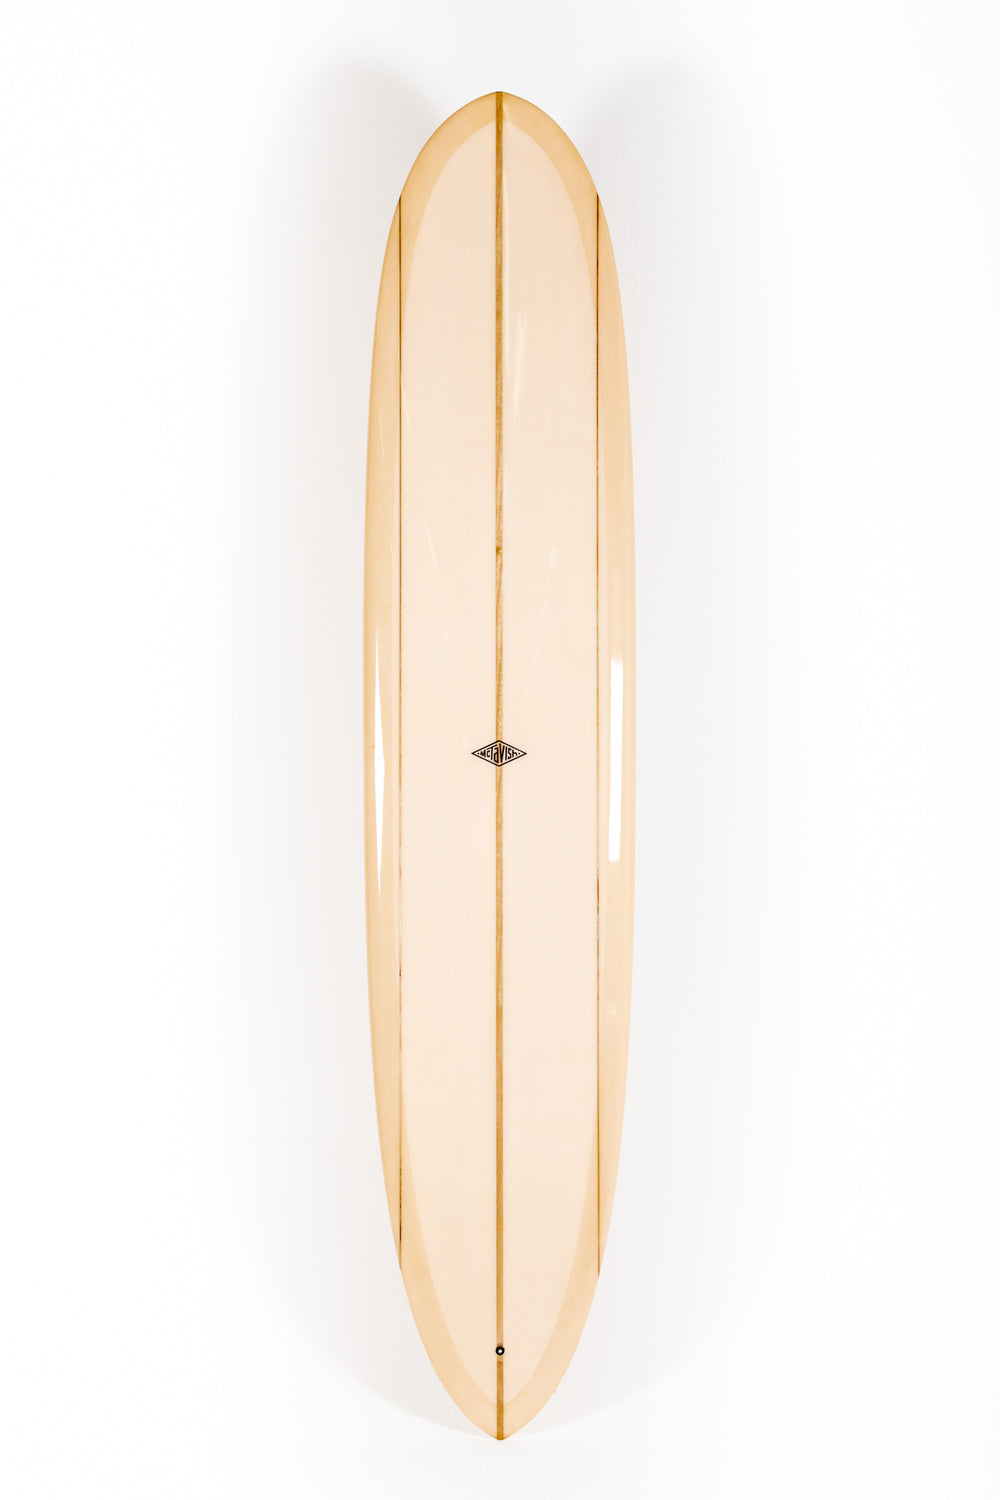 McTavish Surfboard - PINNACLE by Bob McTavish - 9'4